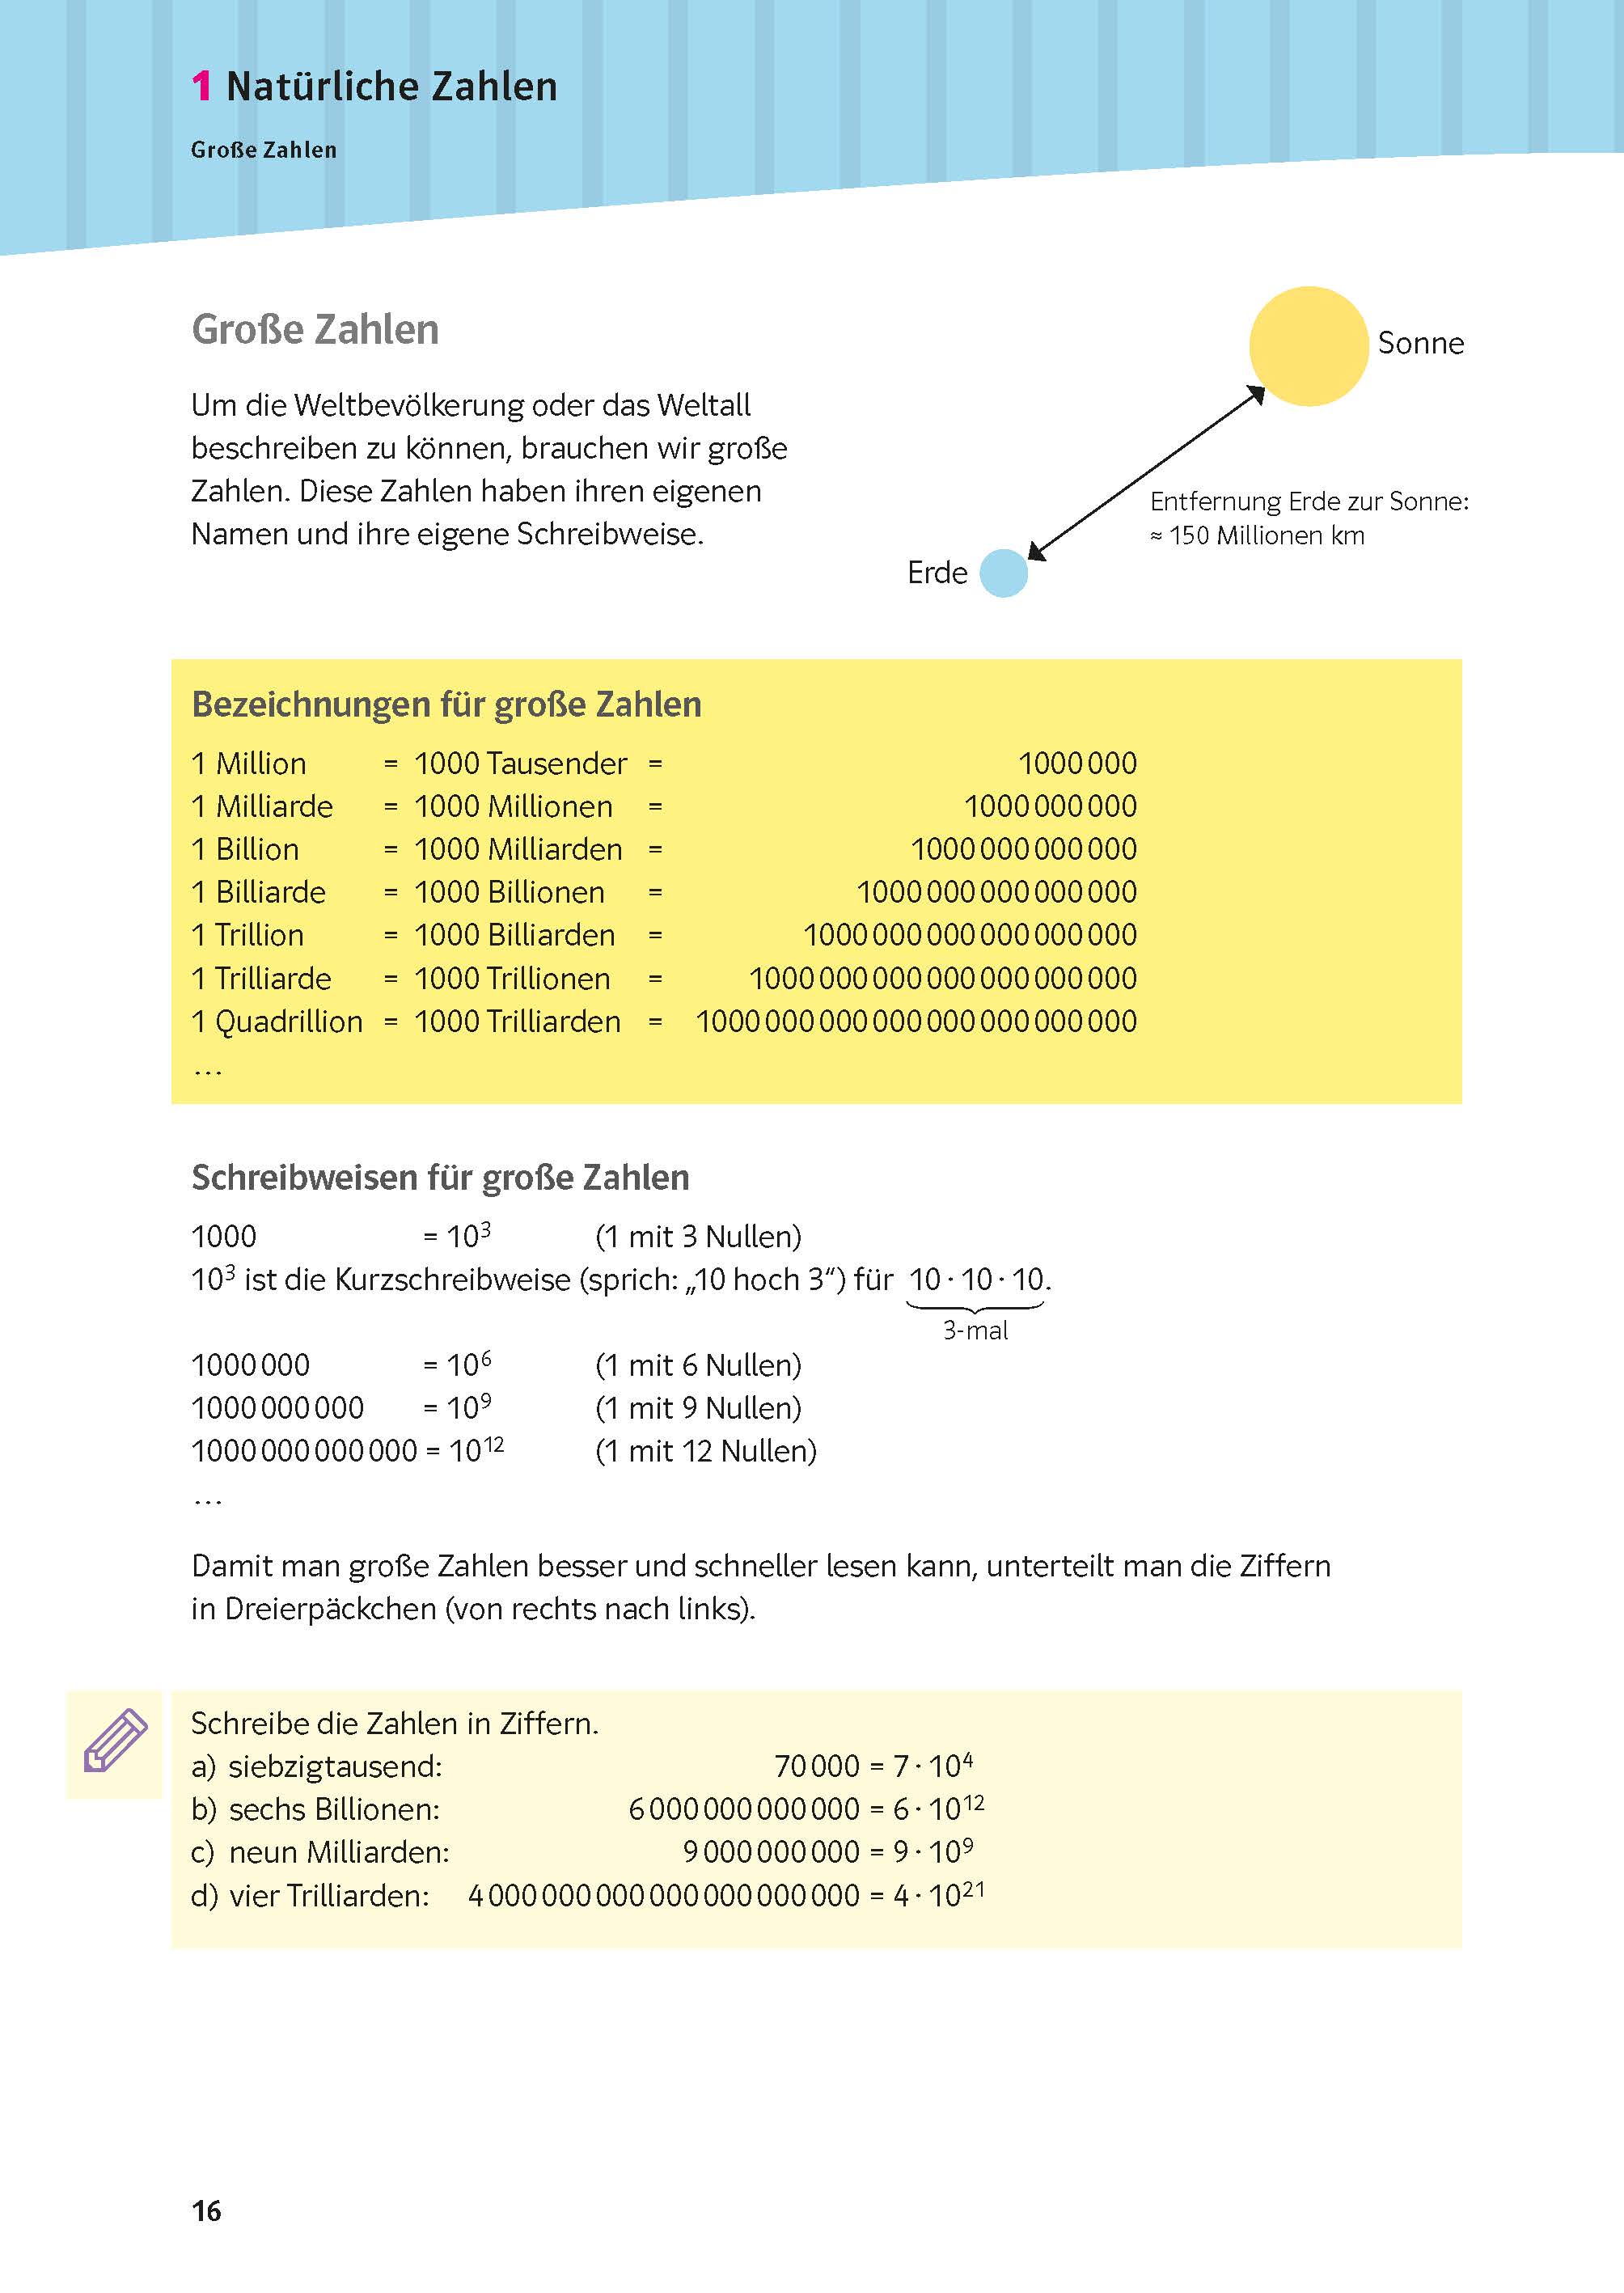 PONS Schulwissen XXL Mathematik 5.-10. Klasse